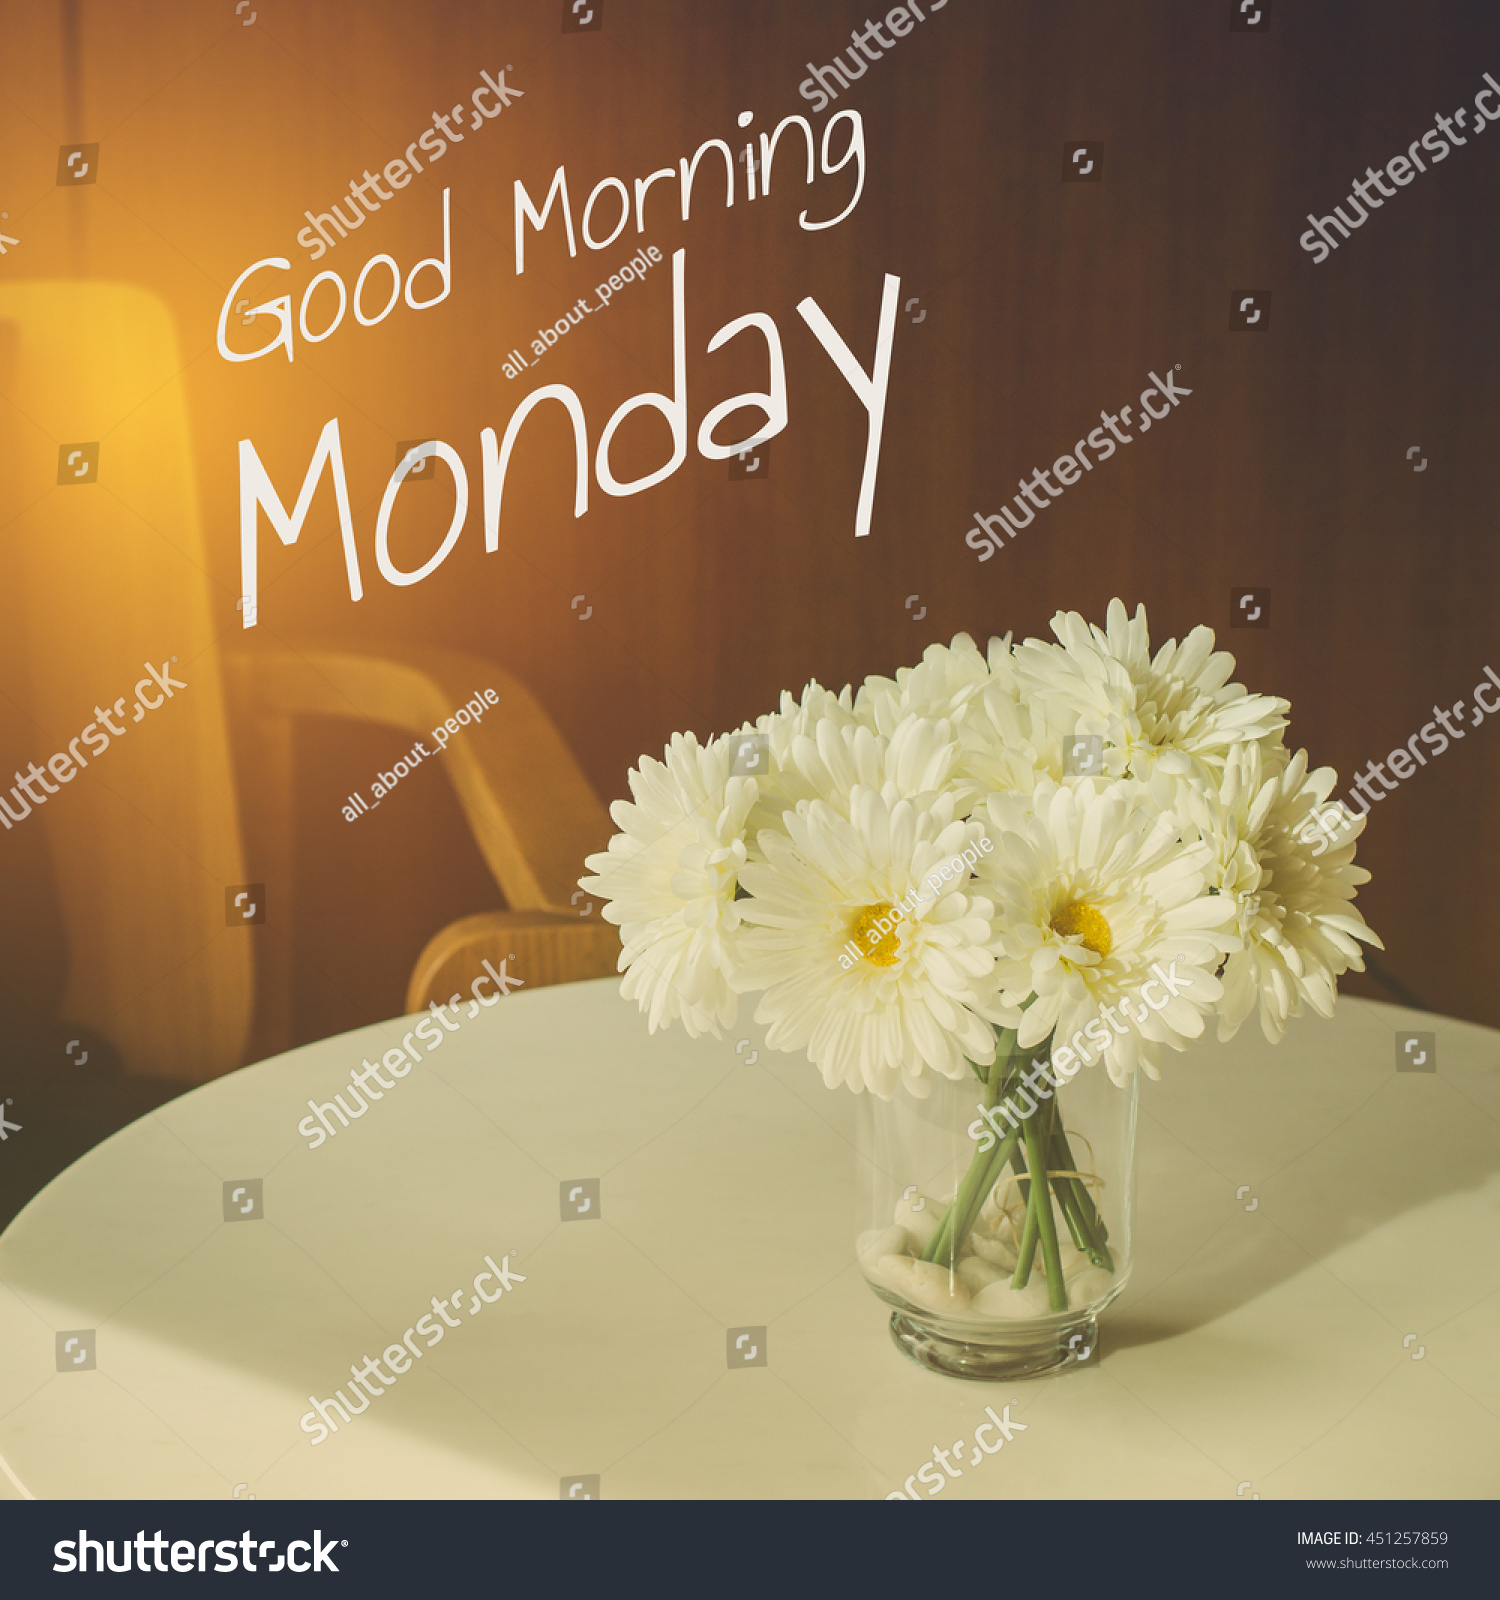 Good Morning Monday Typography Inspiration Motivational Stock Photo